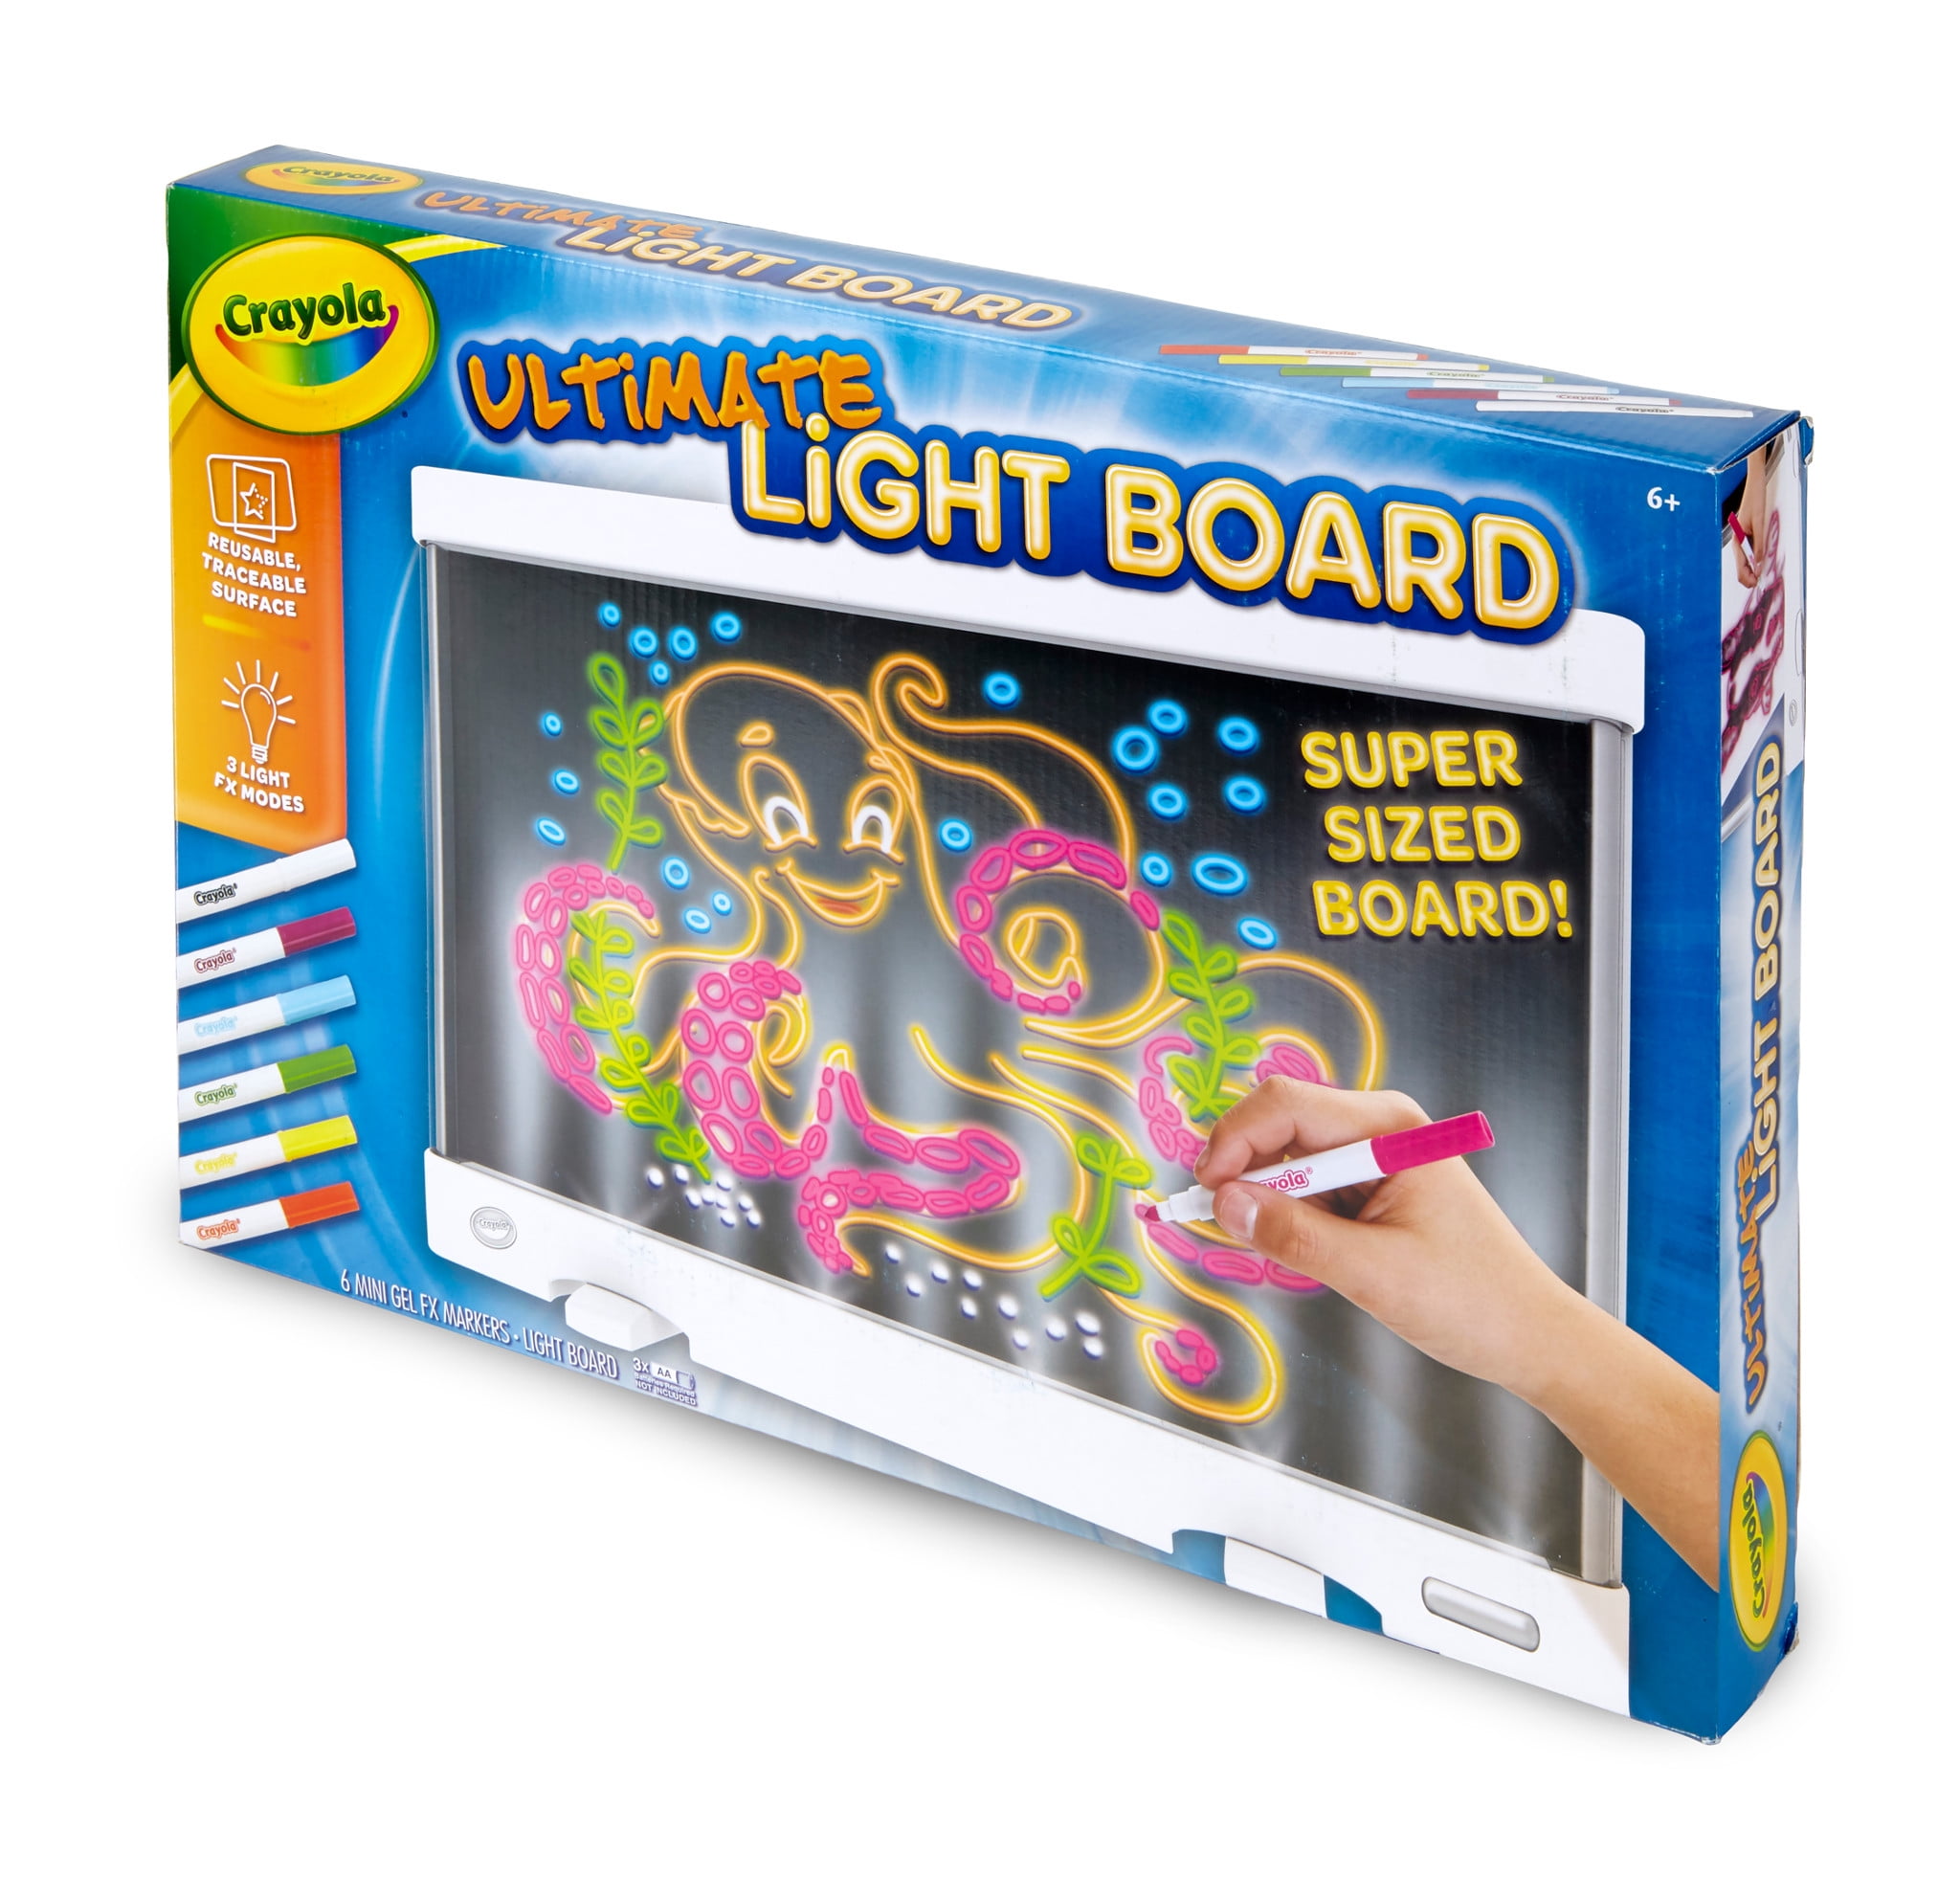 Crayola ultimate light board drawing tablet gift for kids age Crayola Ultimate Light Board Drawing Tablet Coloring Set Child Ages 4 Unisex Walmart Com Walmart Com